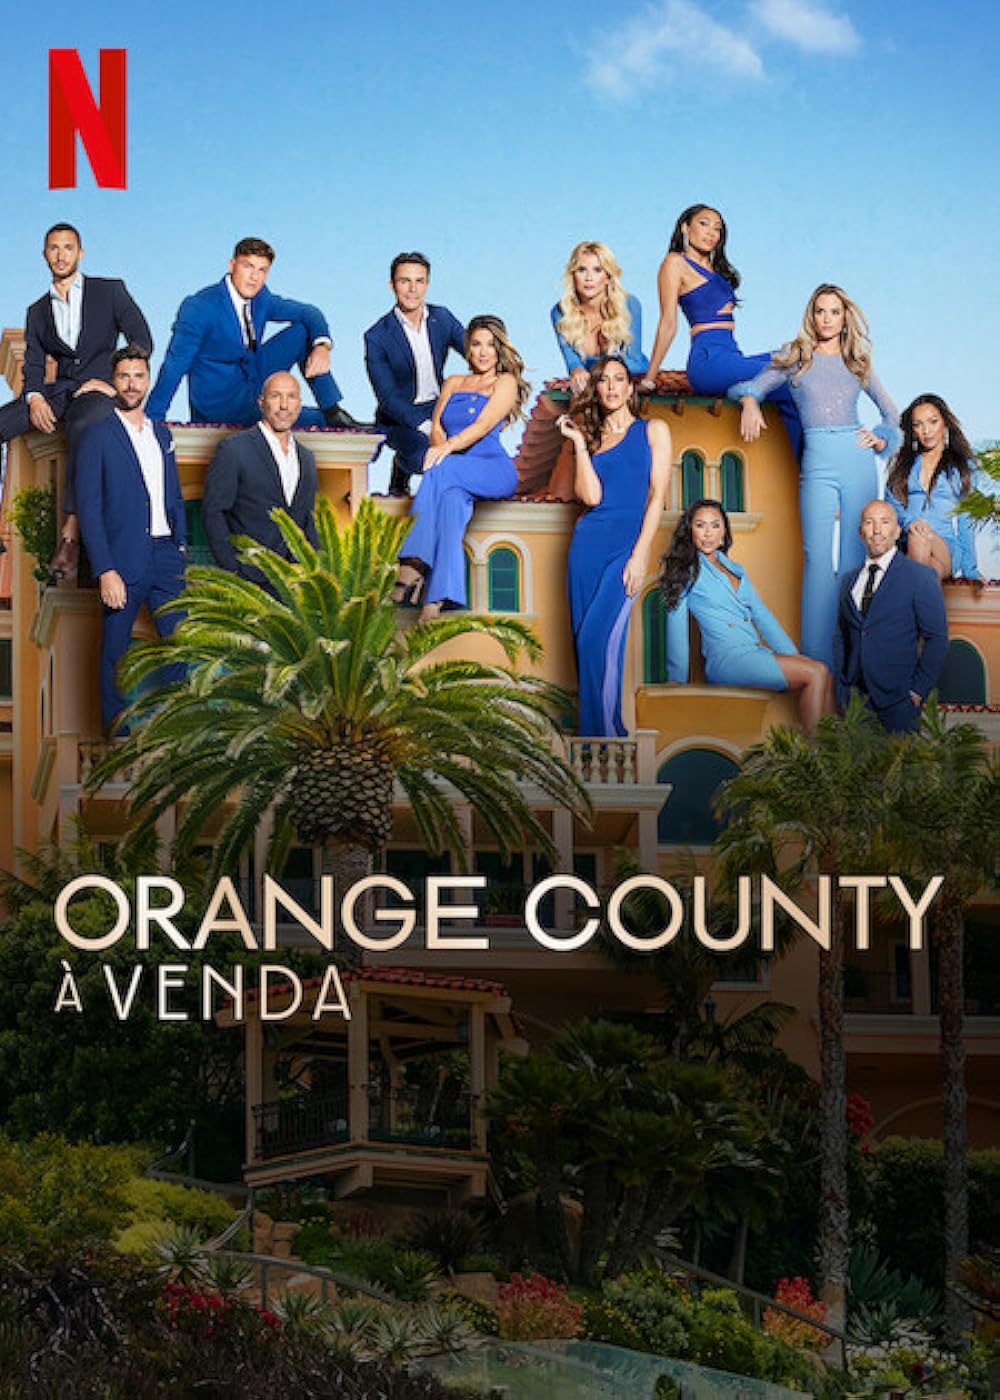 Orange County à Venda – Selling The OC